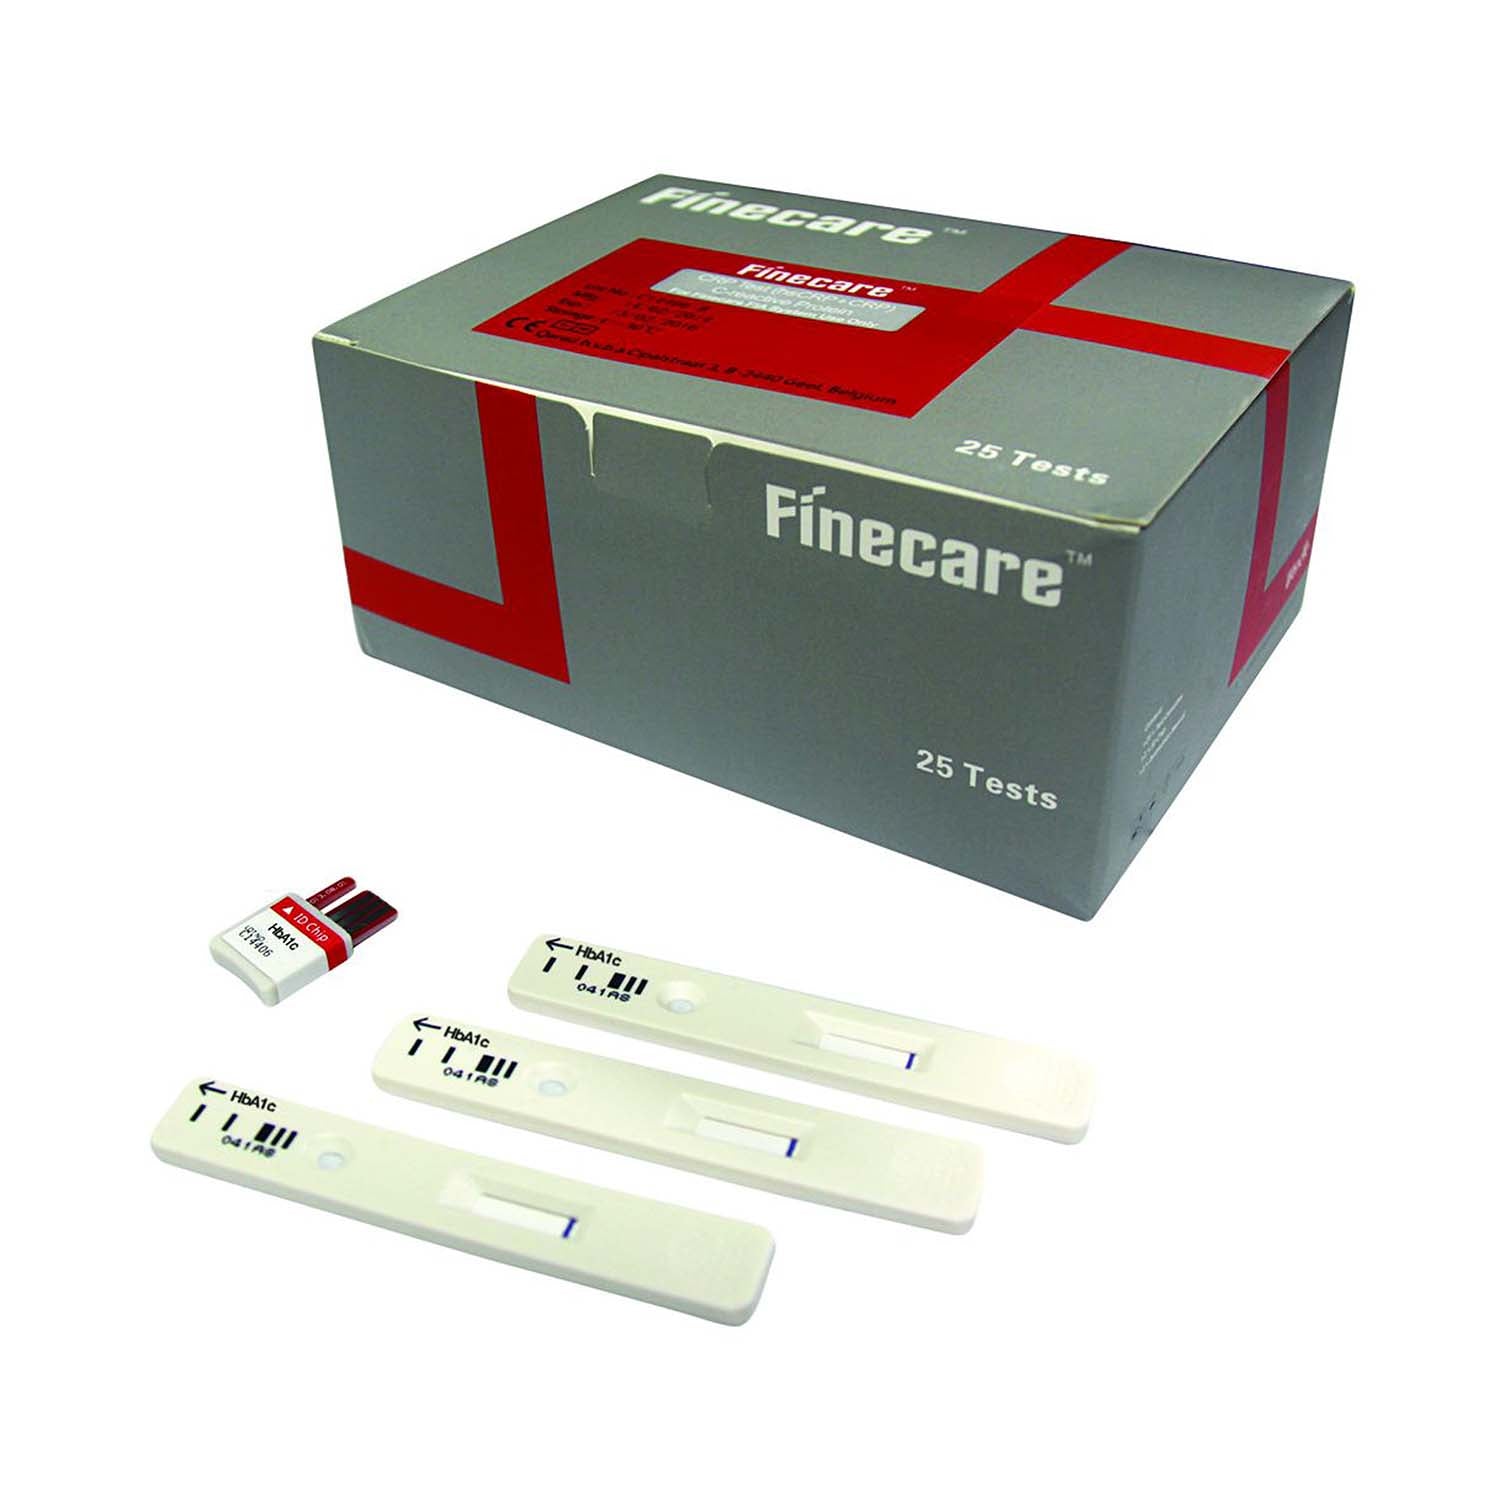 Suresign Finecare HbA1c Test Kit | Pack of 25